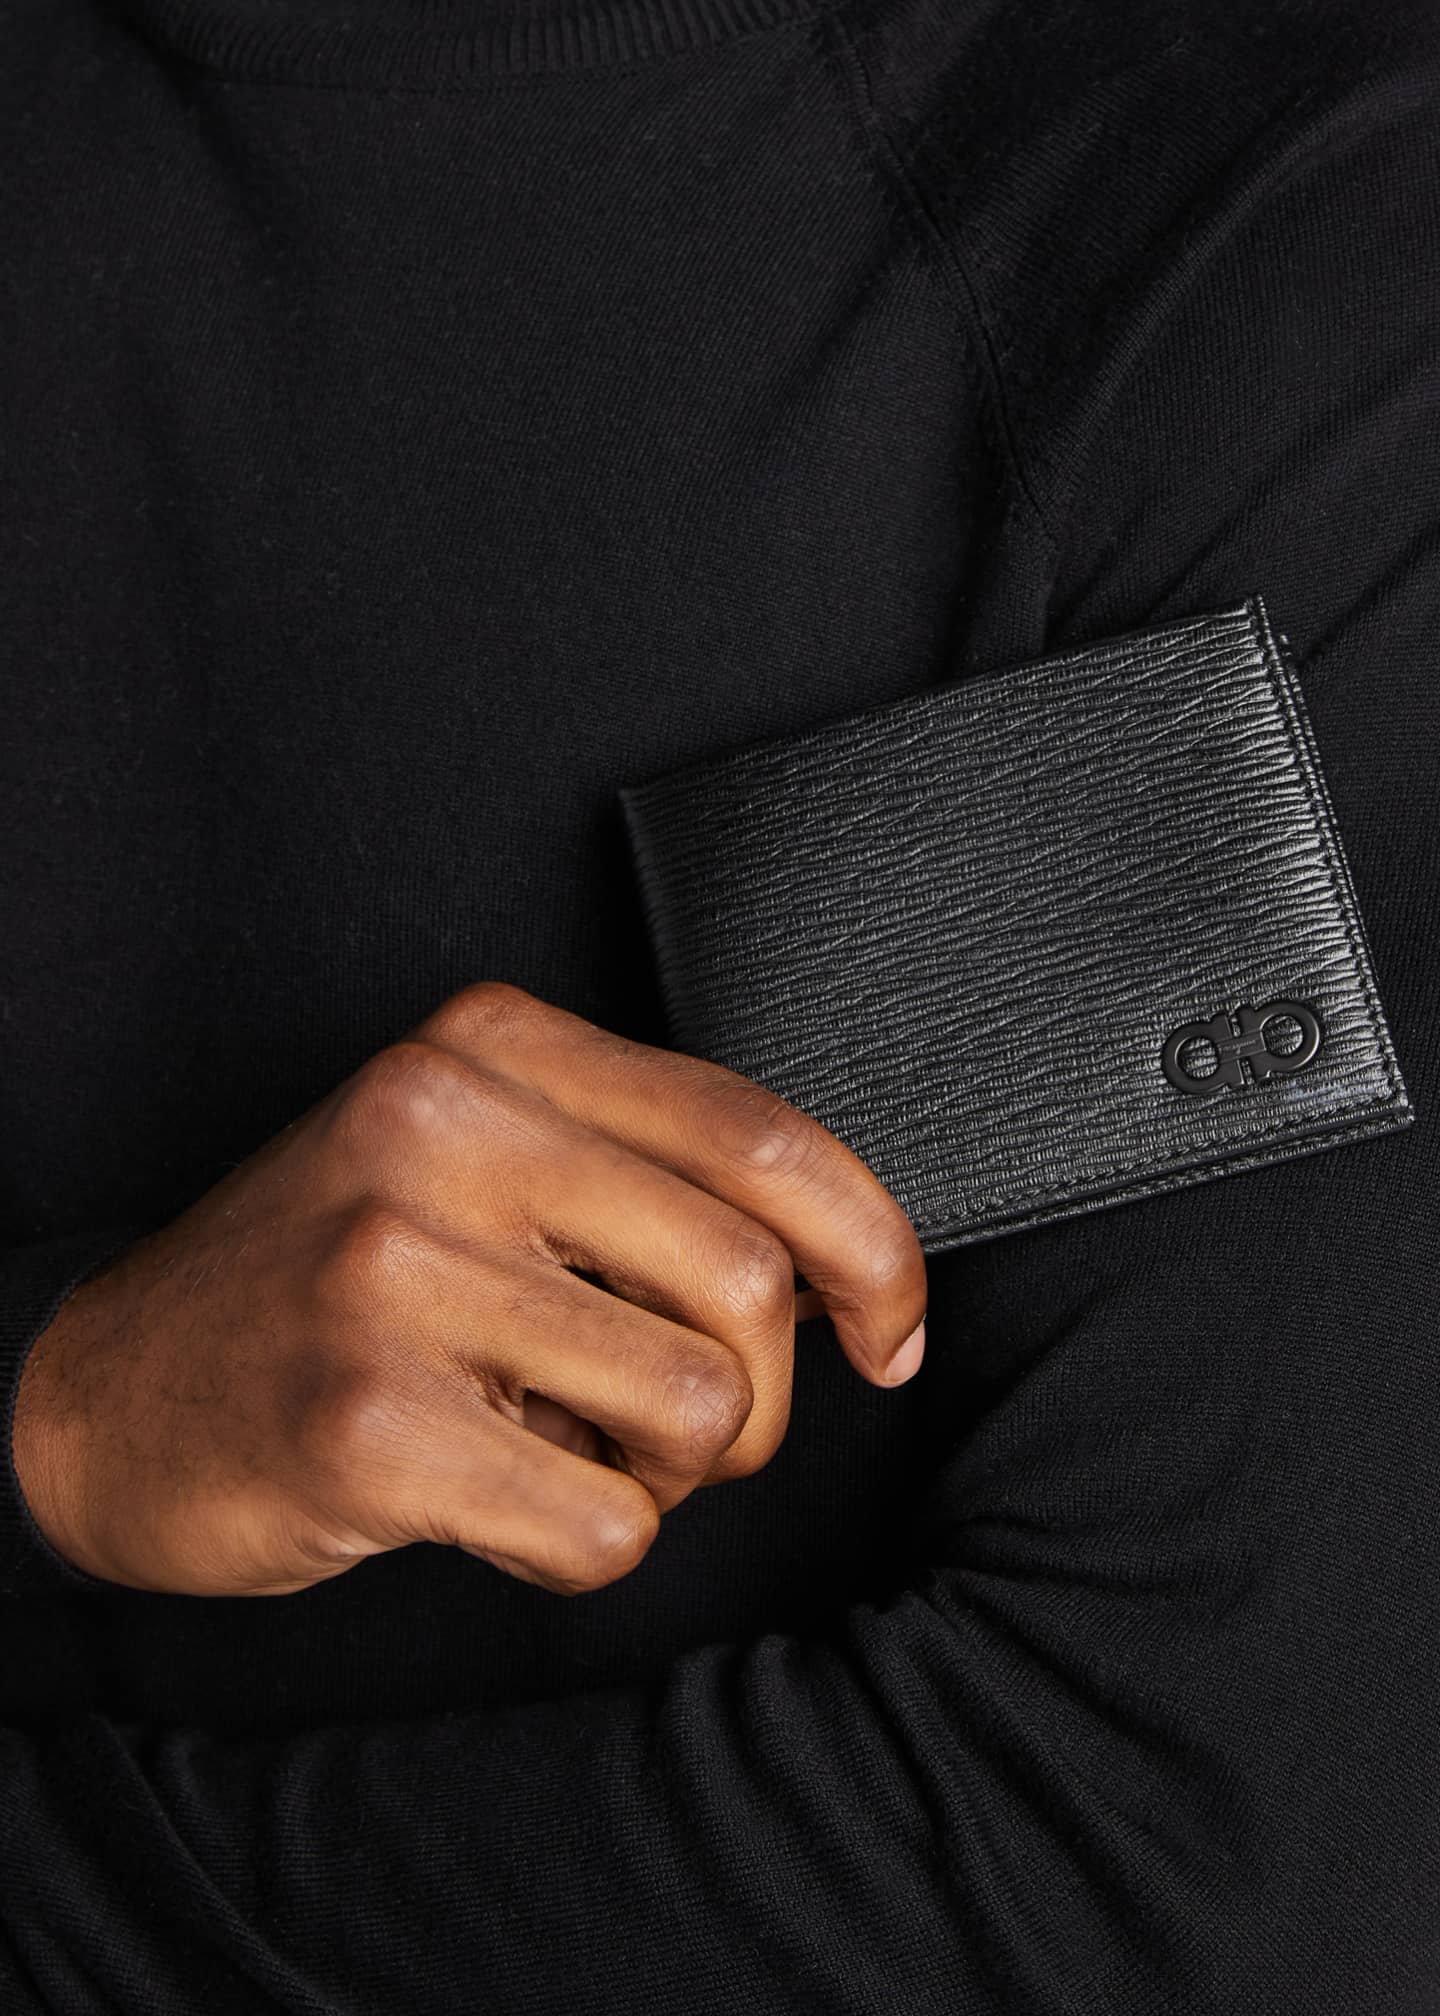 Gancini wallet